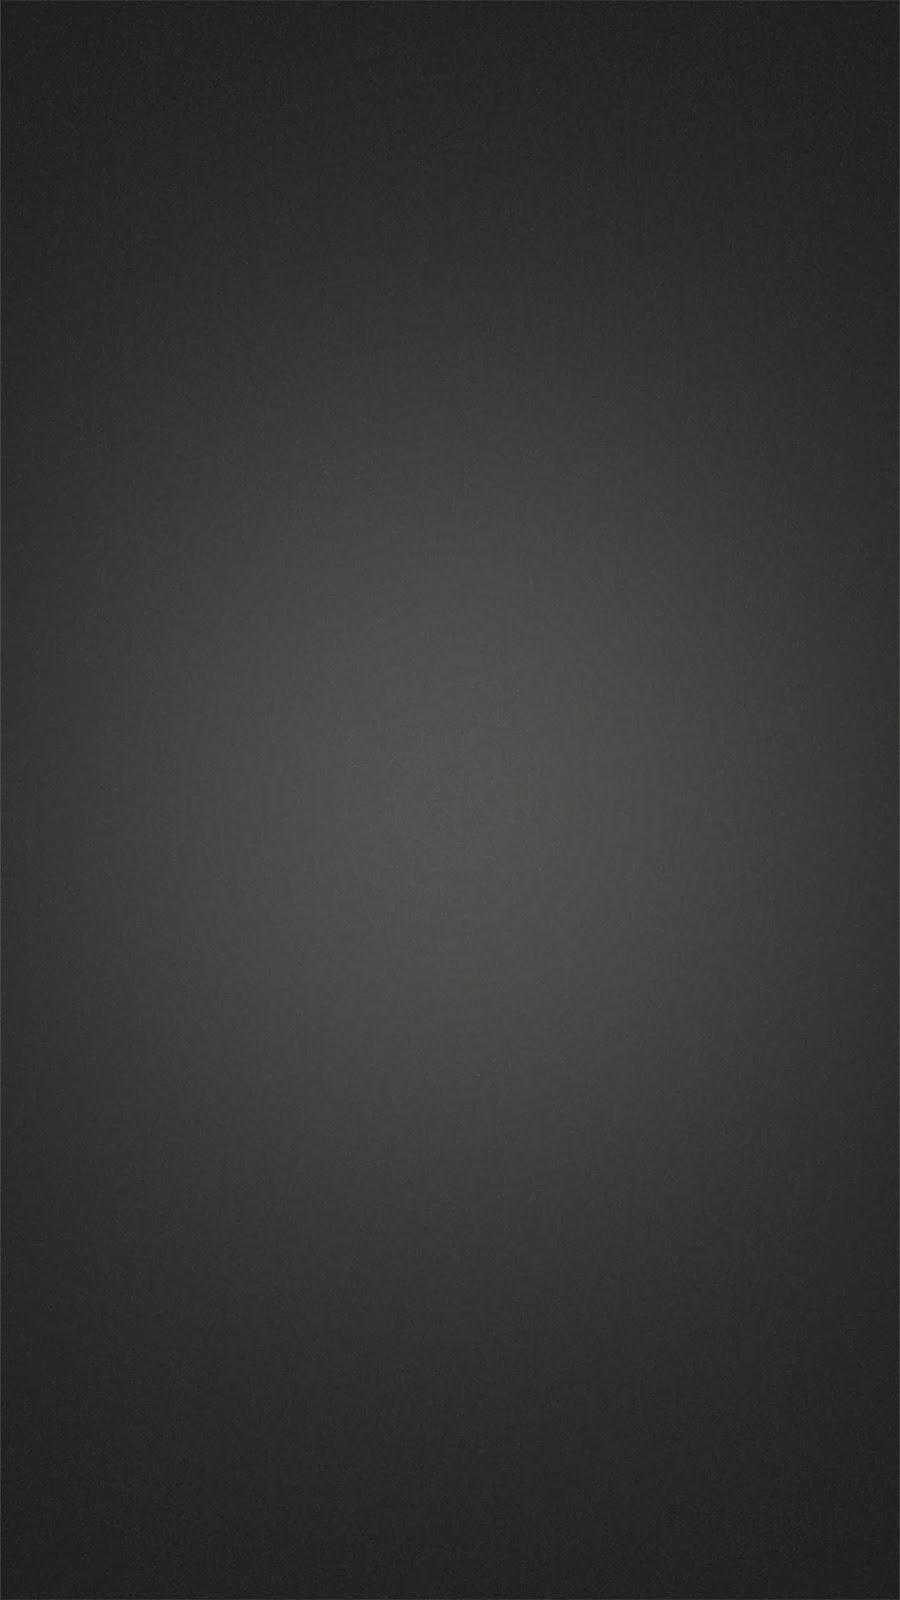 Free download Android Phone Black Wallpaper Wallpaper